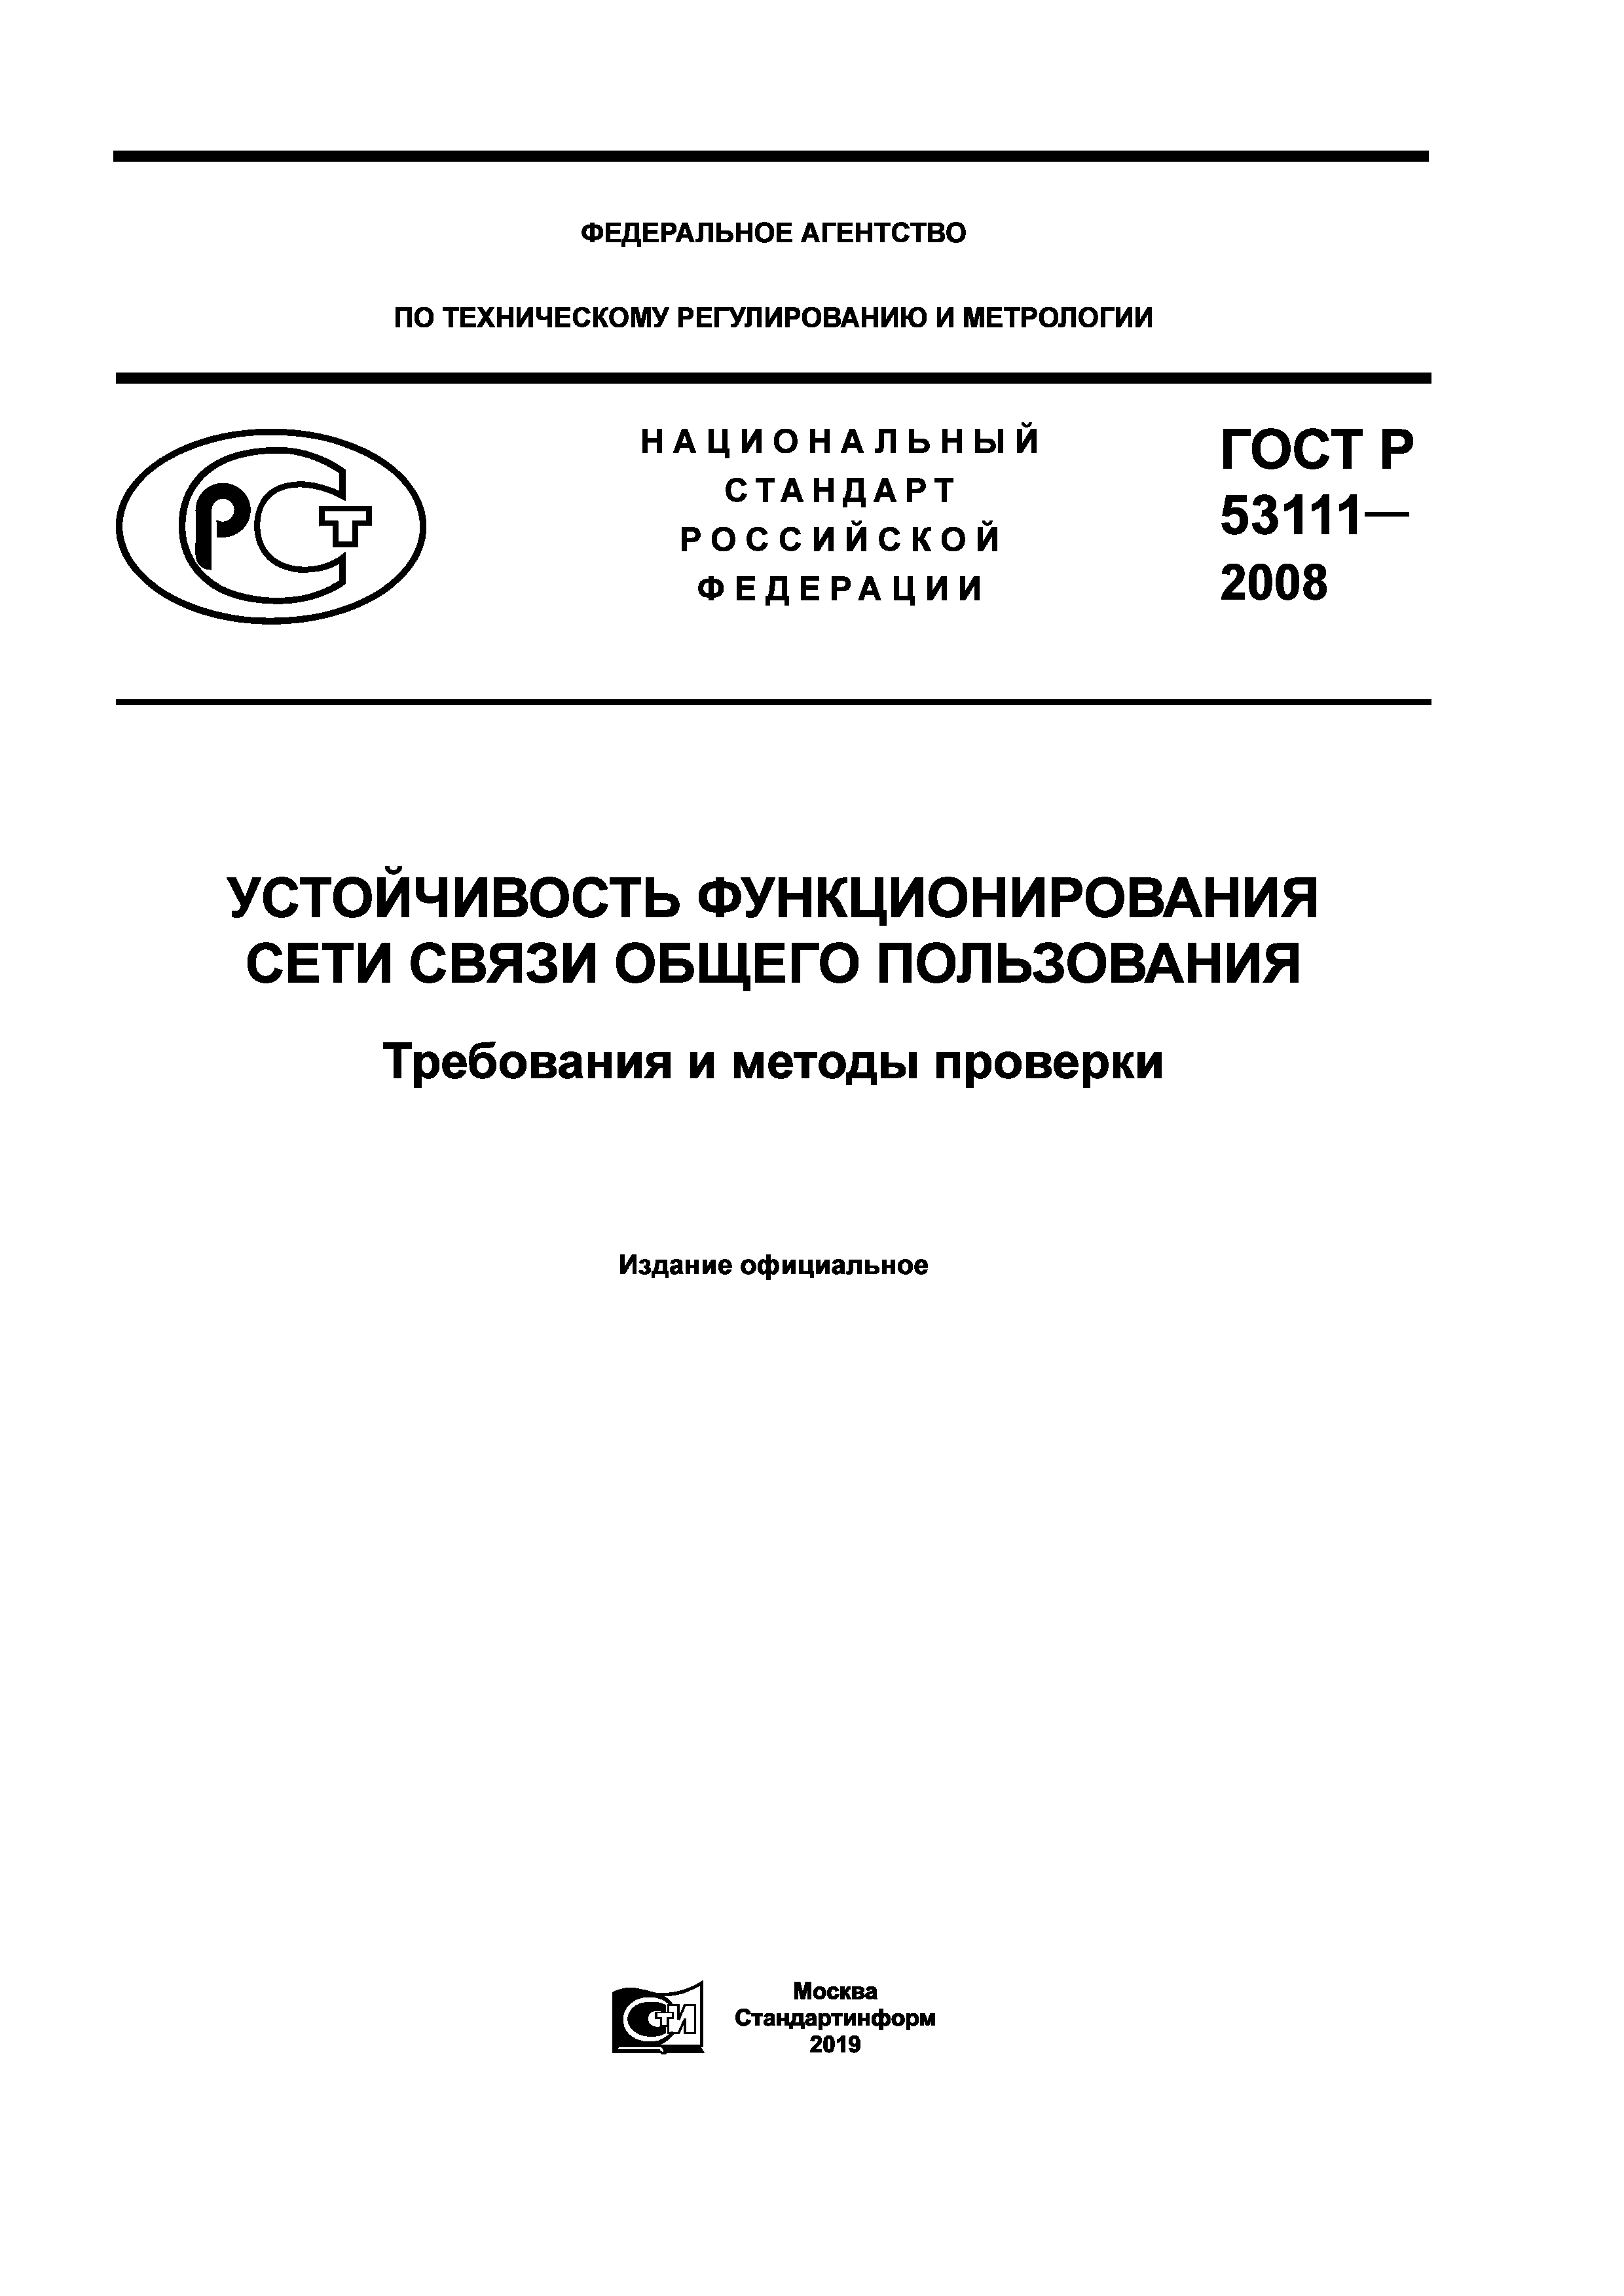 ГОСТ Р 53111-2008